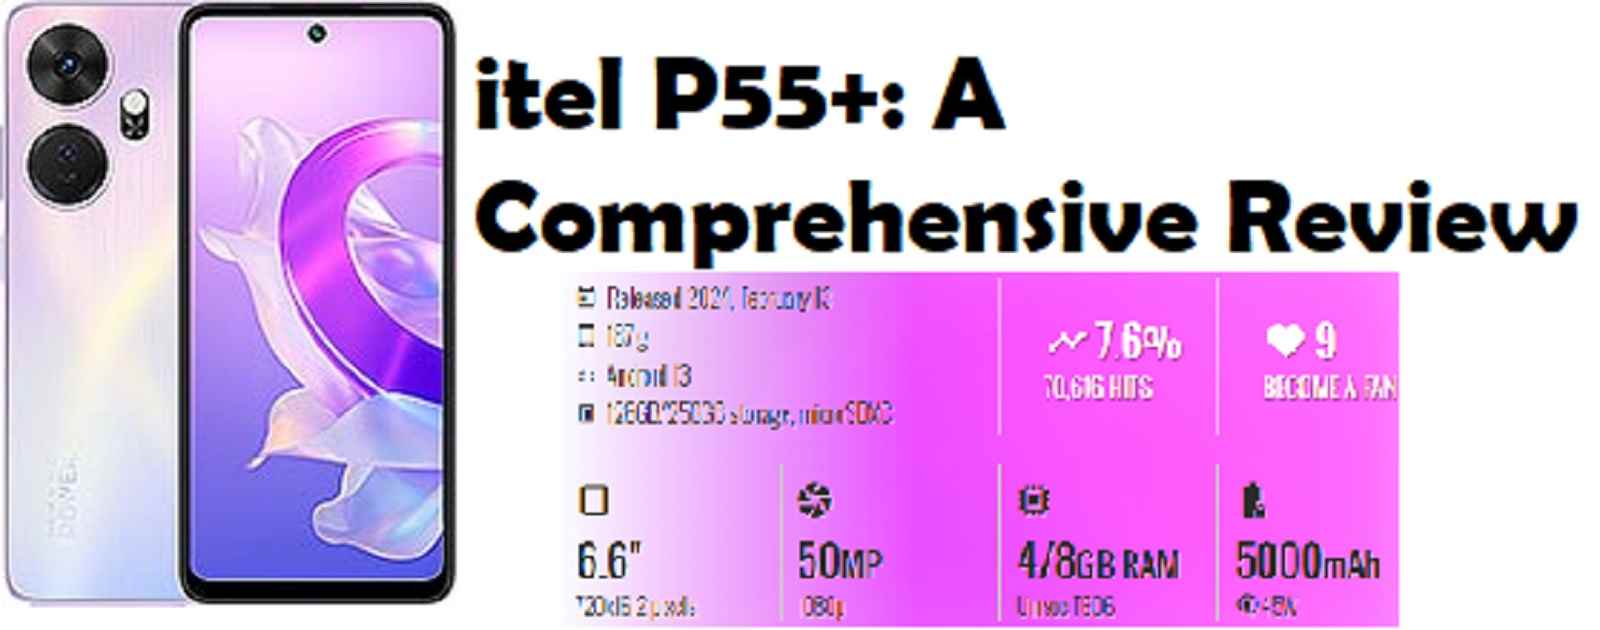 itel P55+: A Comprehensive Review